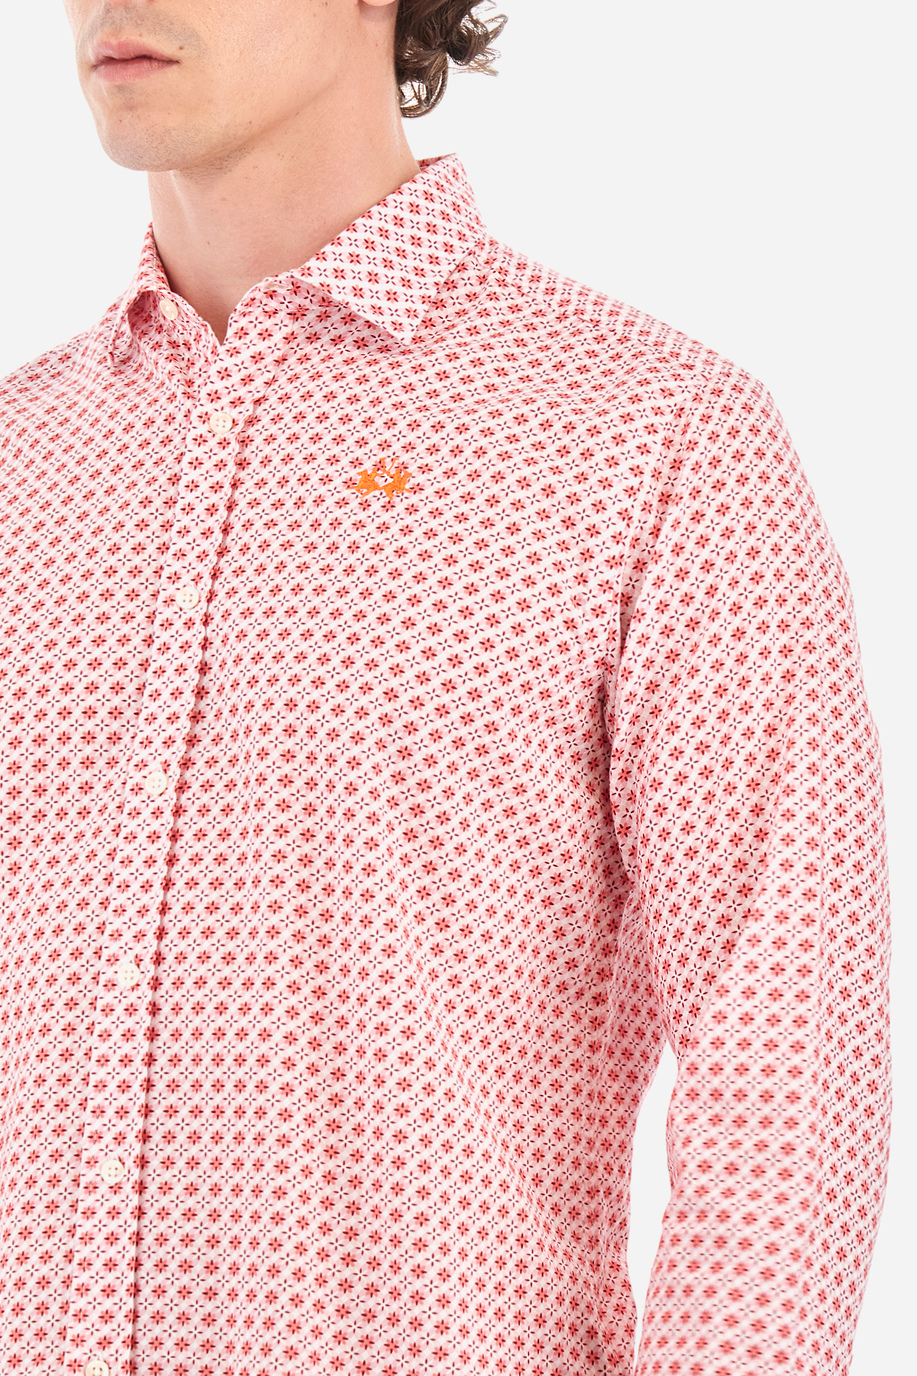 Geometric patterned poplin shirt - Innocent - Shirts | La Martina - Official Online Shop